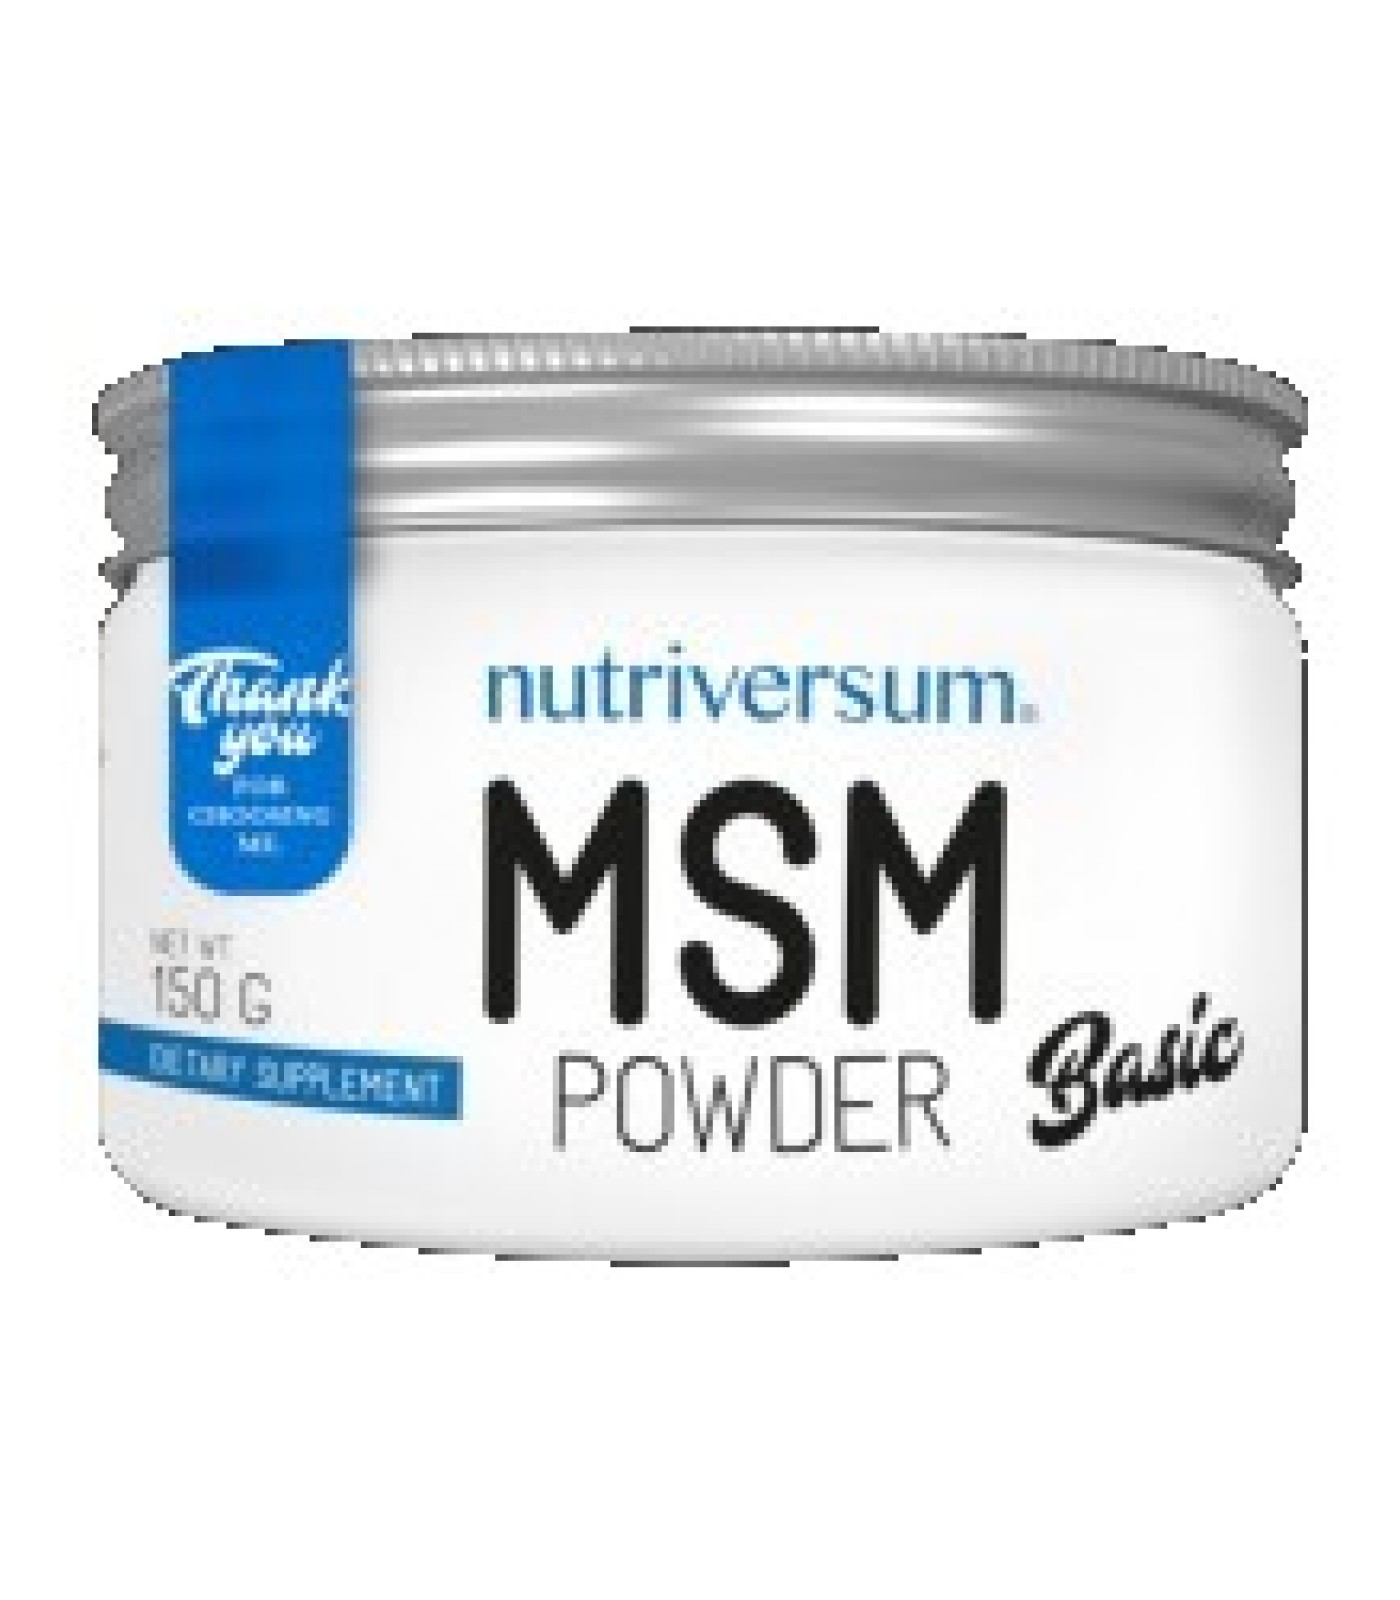 Nutriversum - MSM Powder / 150 gr.